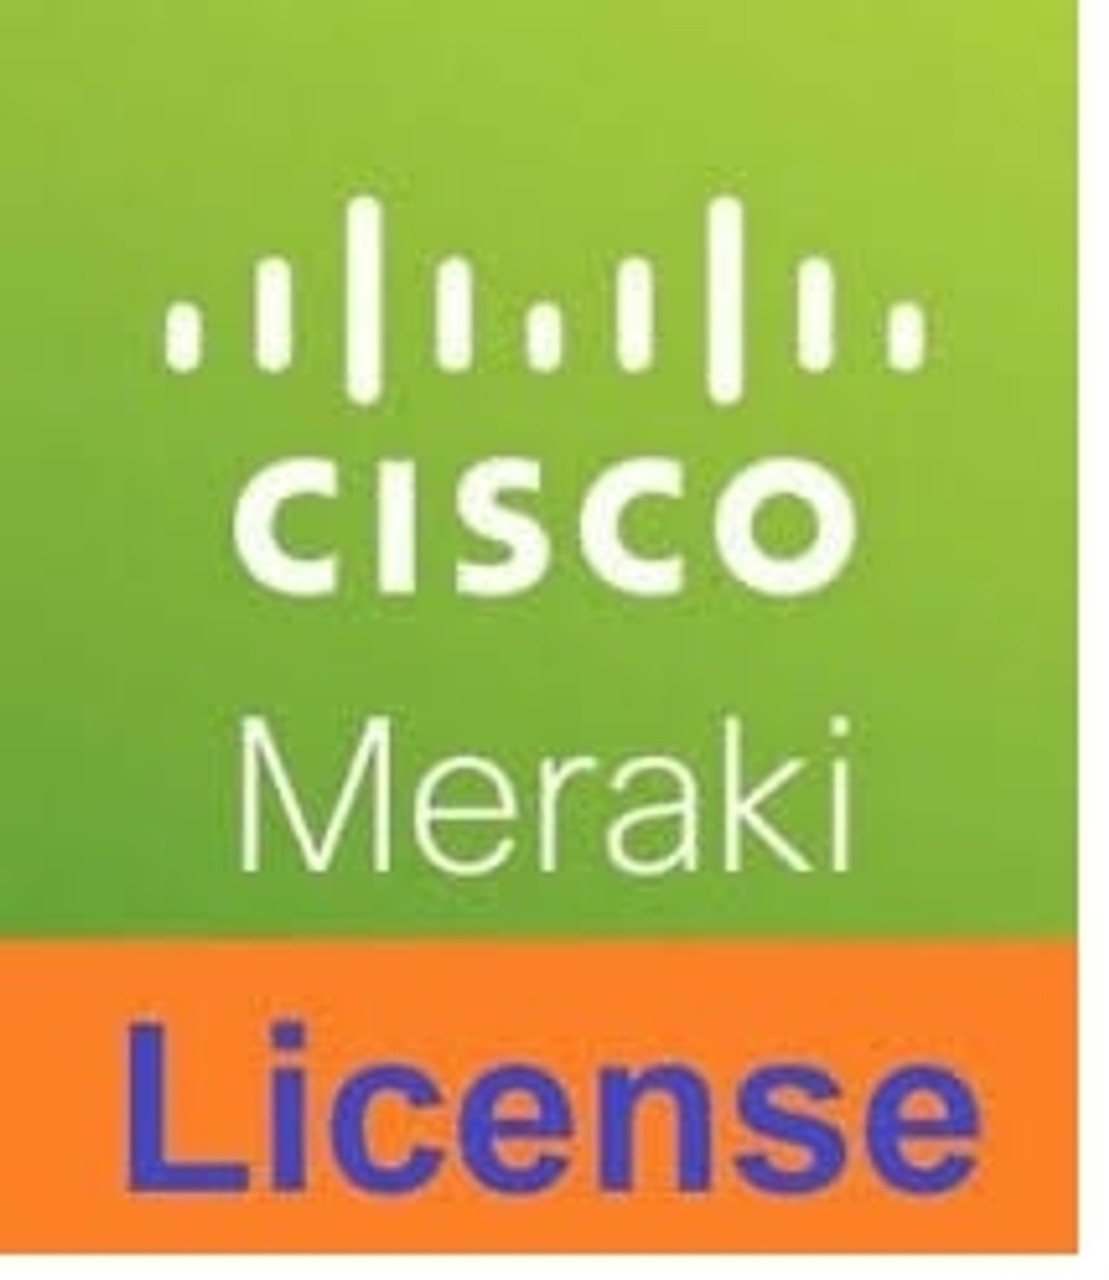 EOS Meraki MS220-48 Enterprise License and Support, 7 Year